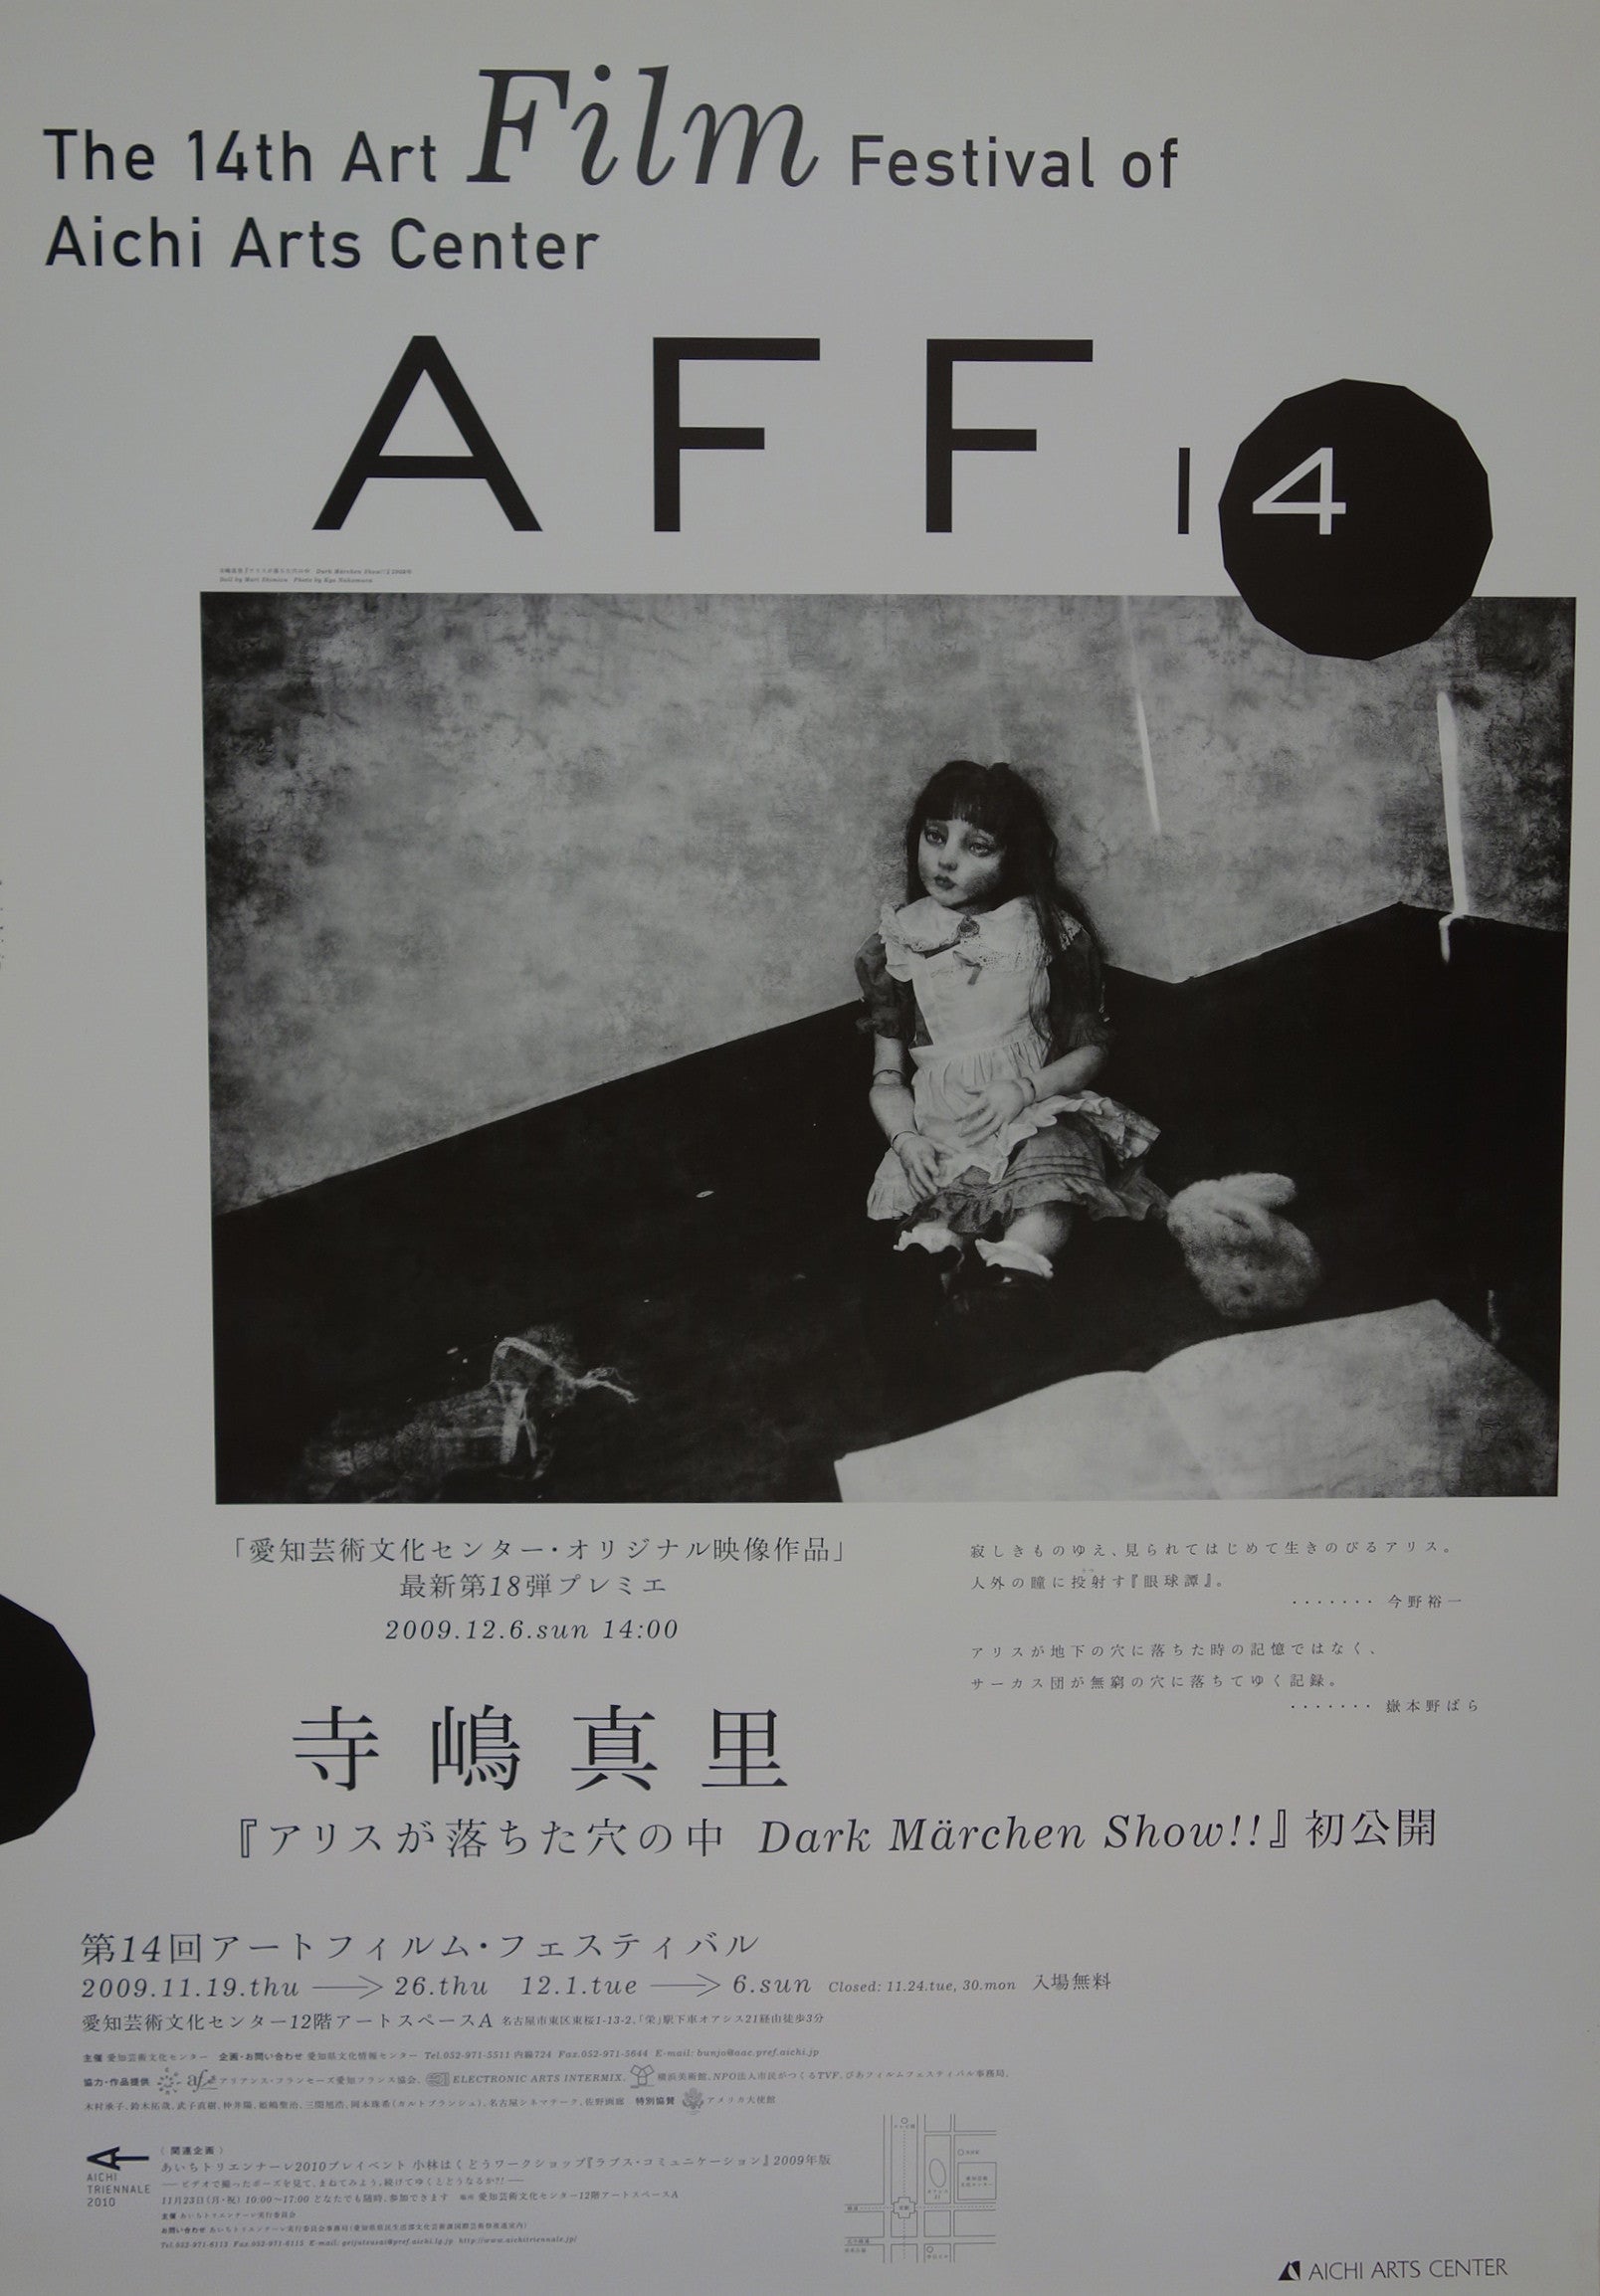 Art Film Festival of Aichi Arts Center